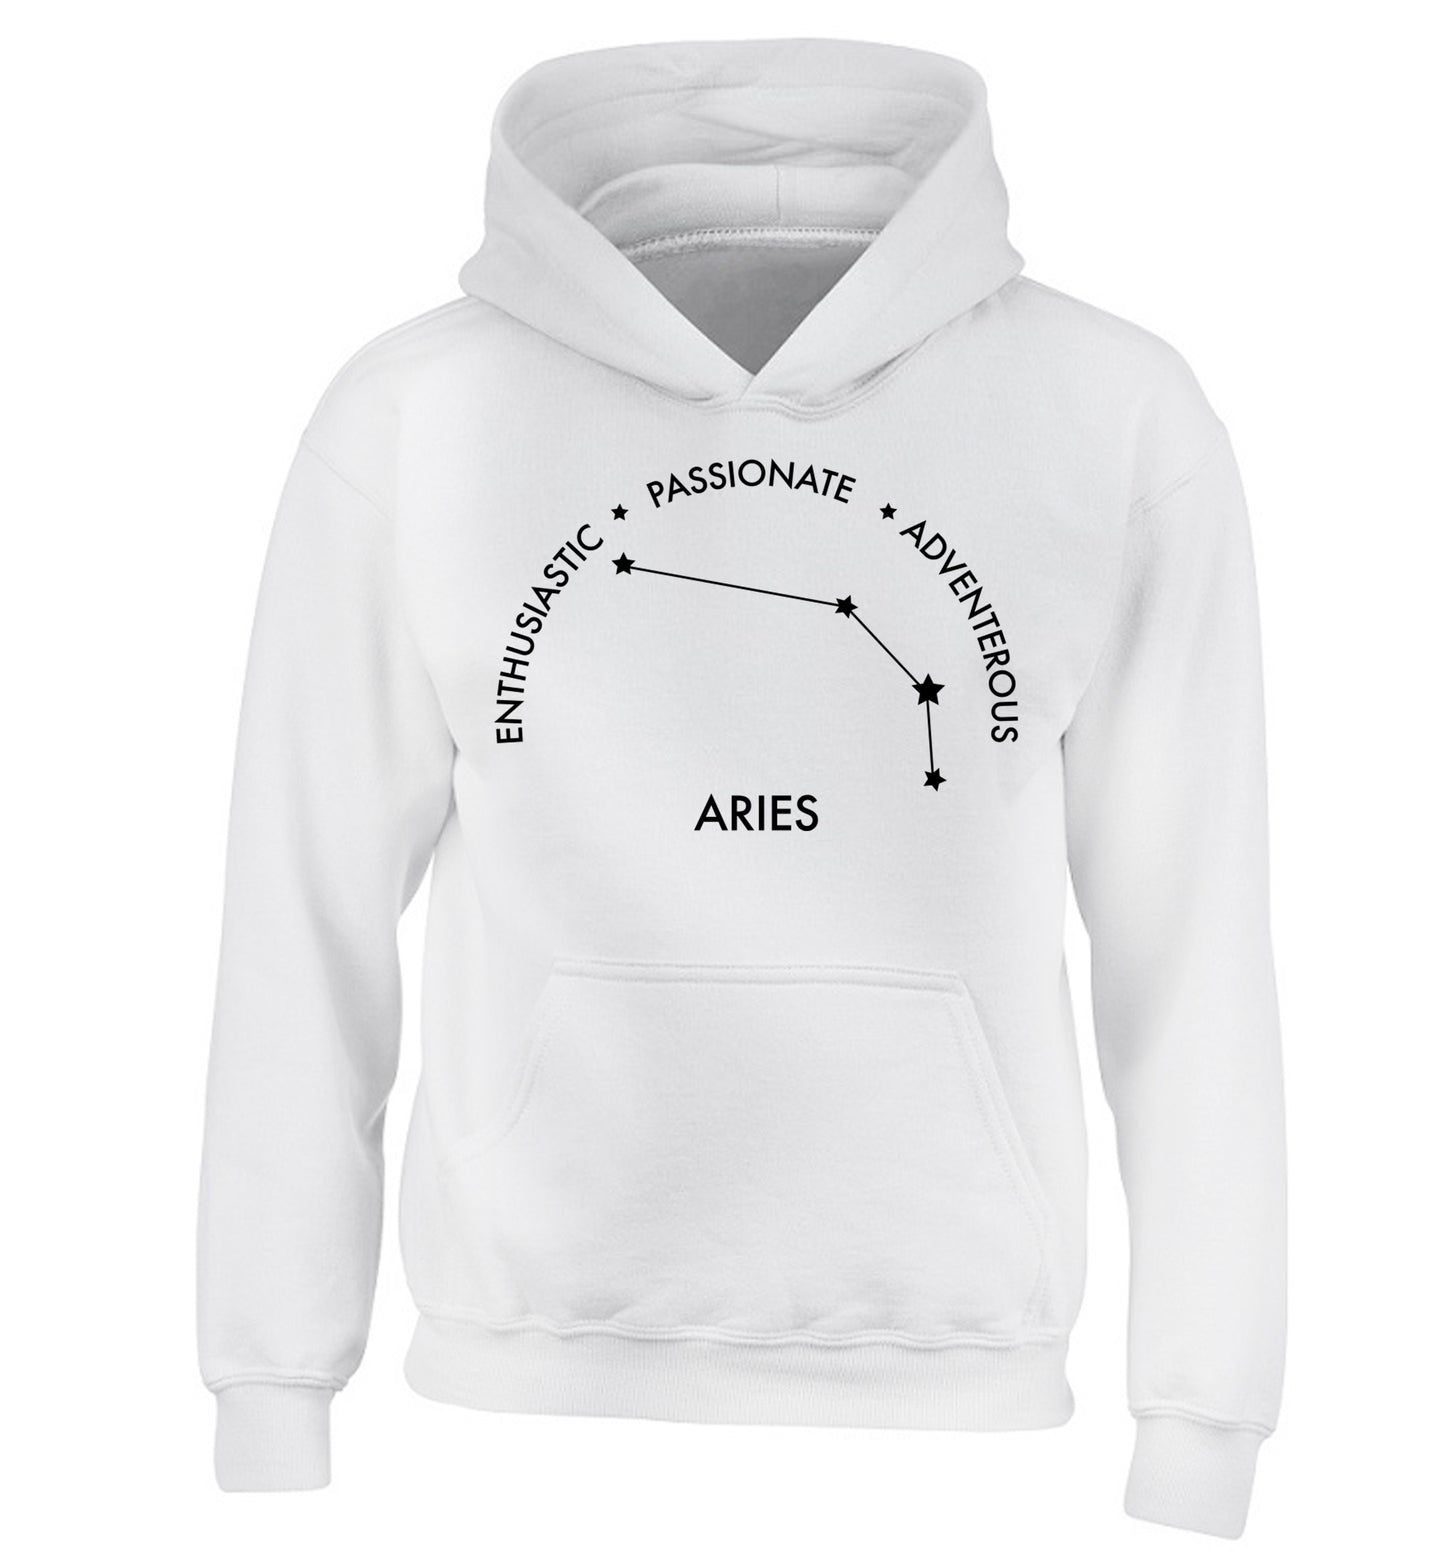 Aries enthusiastic | passionate | adventerous children's white hoodie 12-13 Years